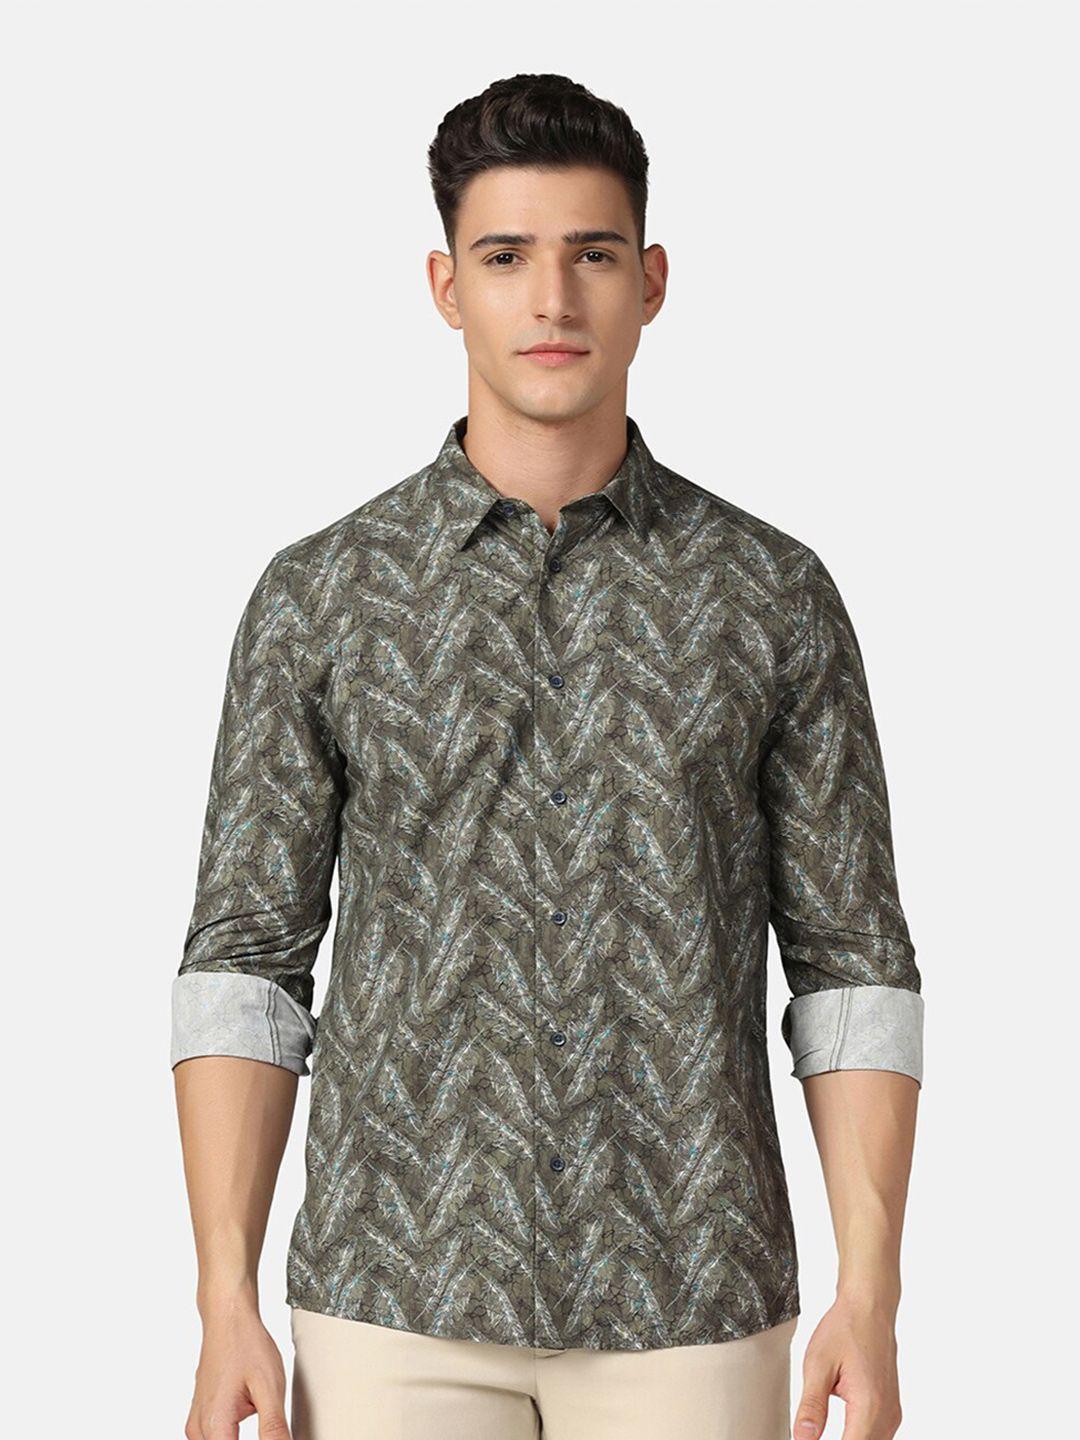 blackberrys indian slim graphic printed slim fit casual shirt